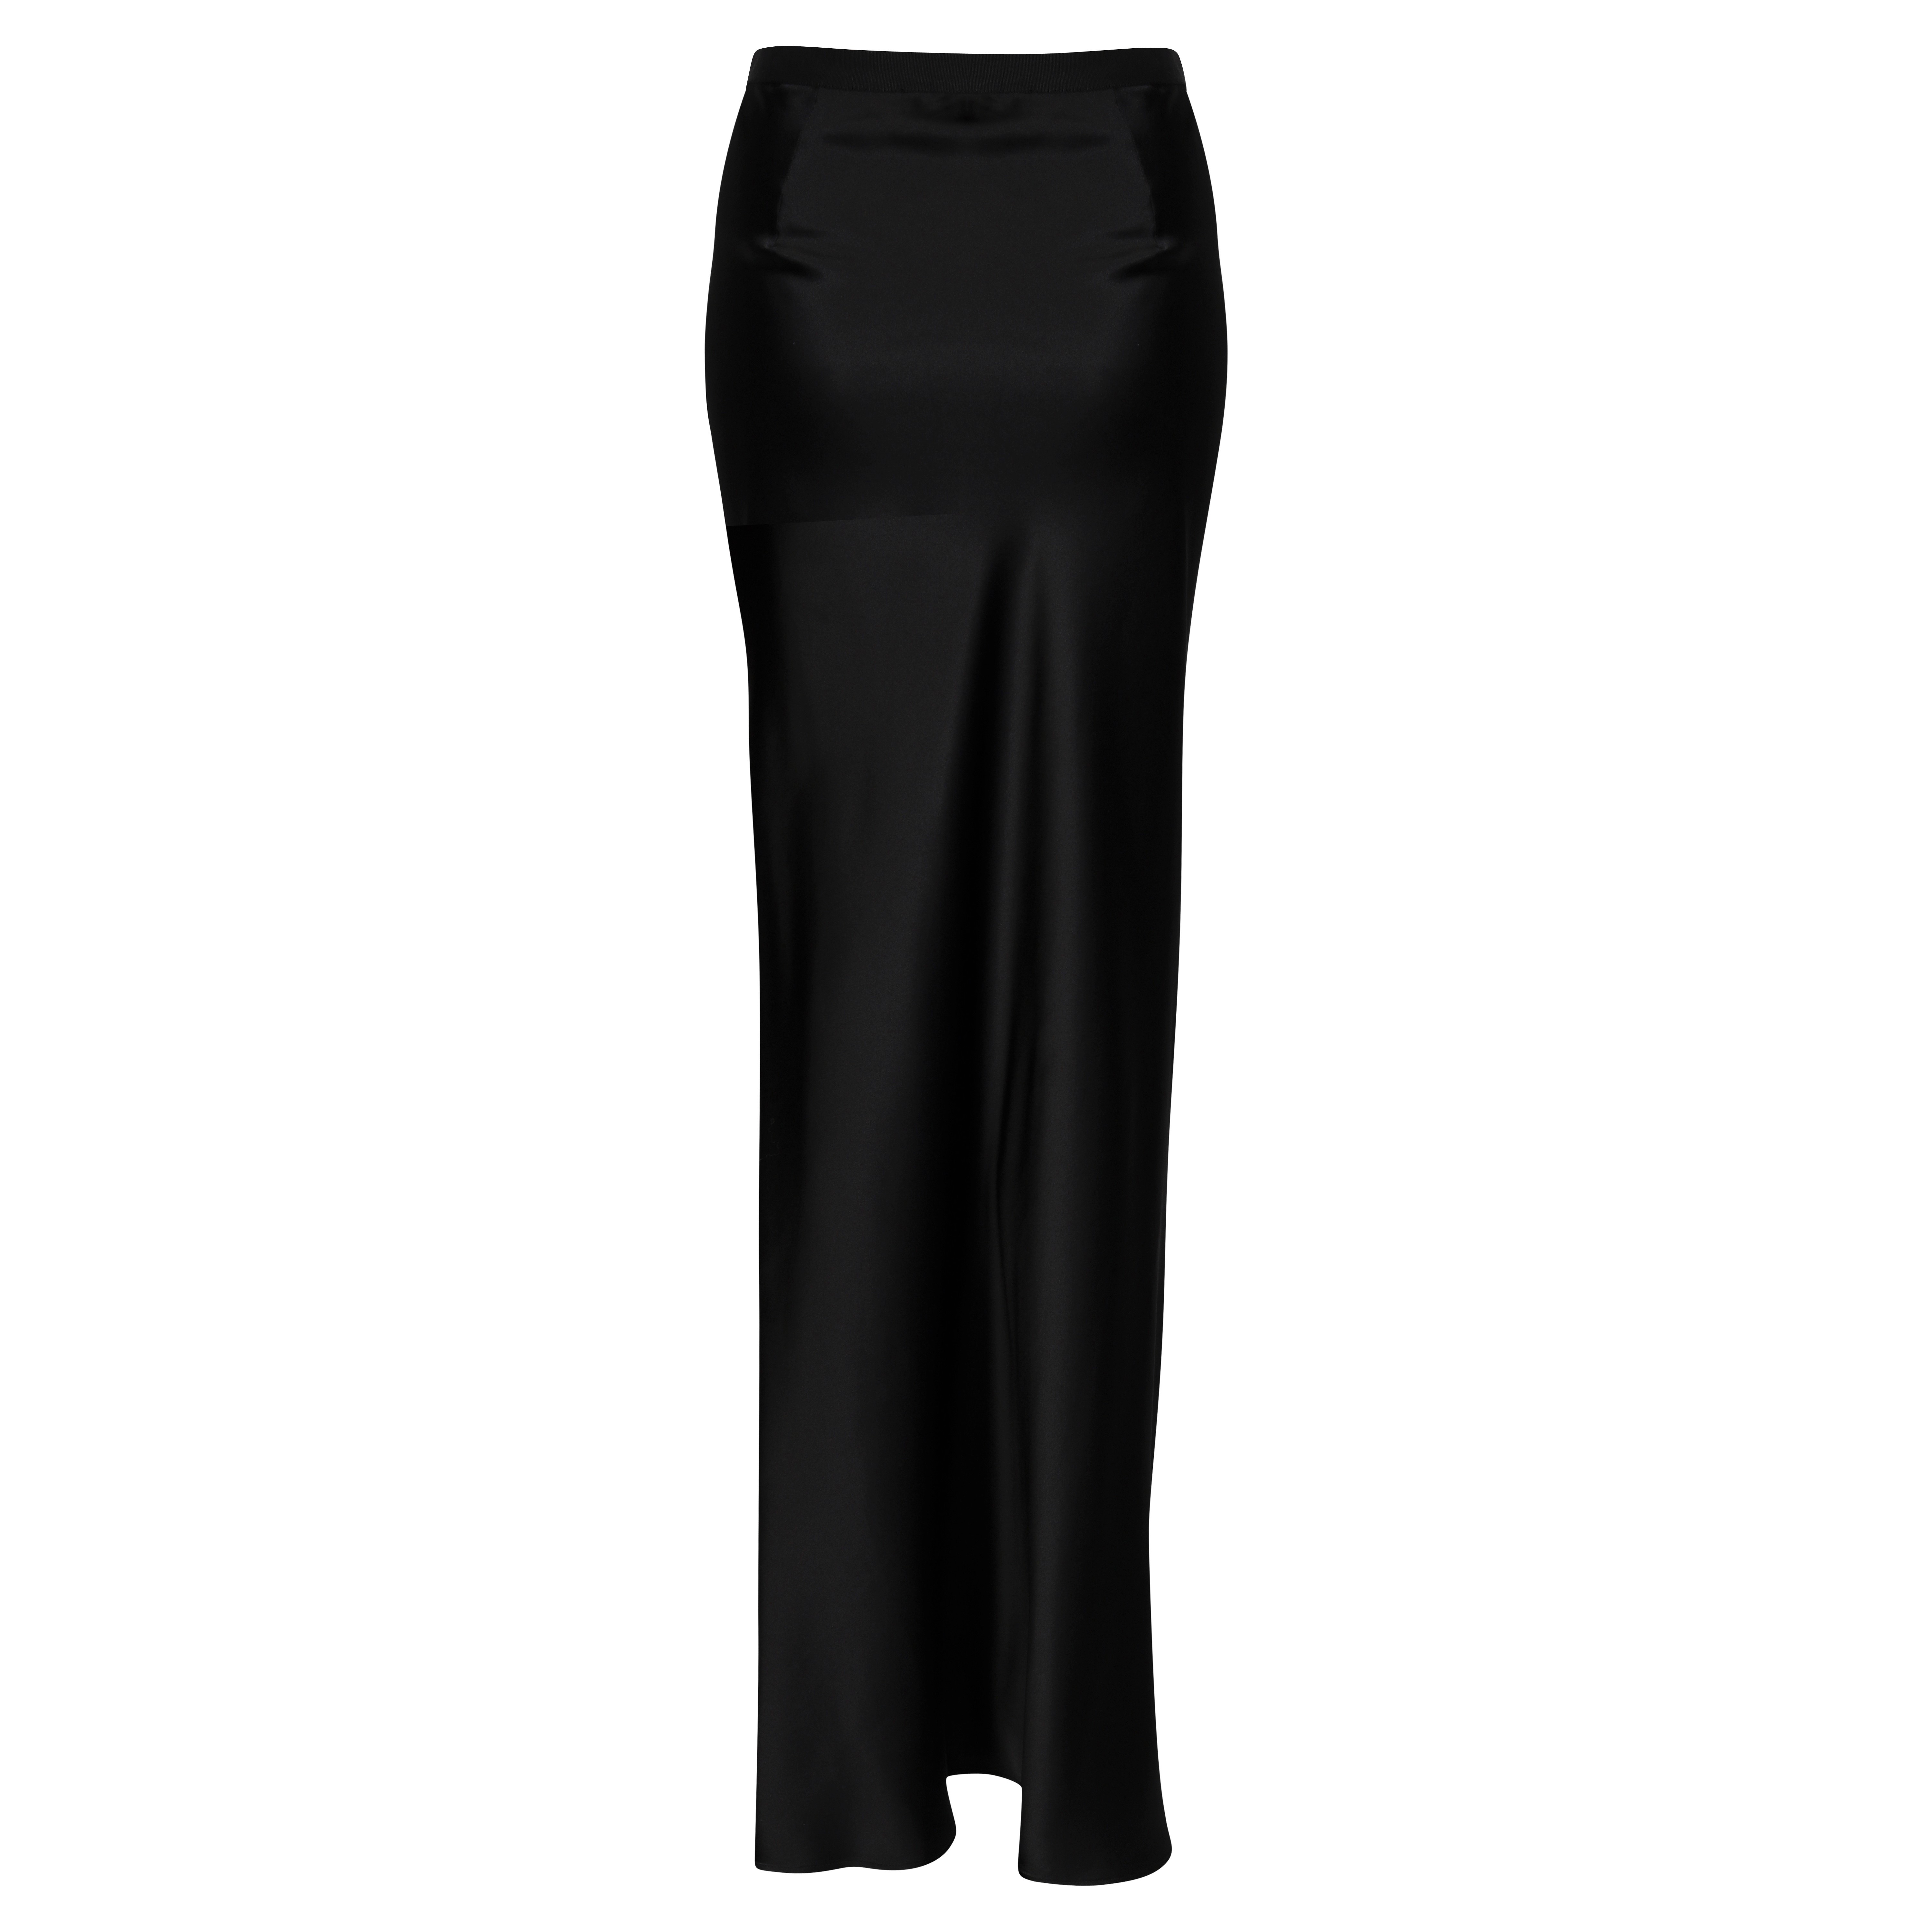 NILI LOTAN Azalea Skirt in Black Silk S - US2